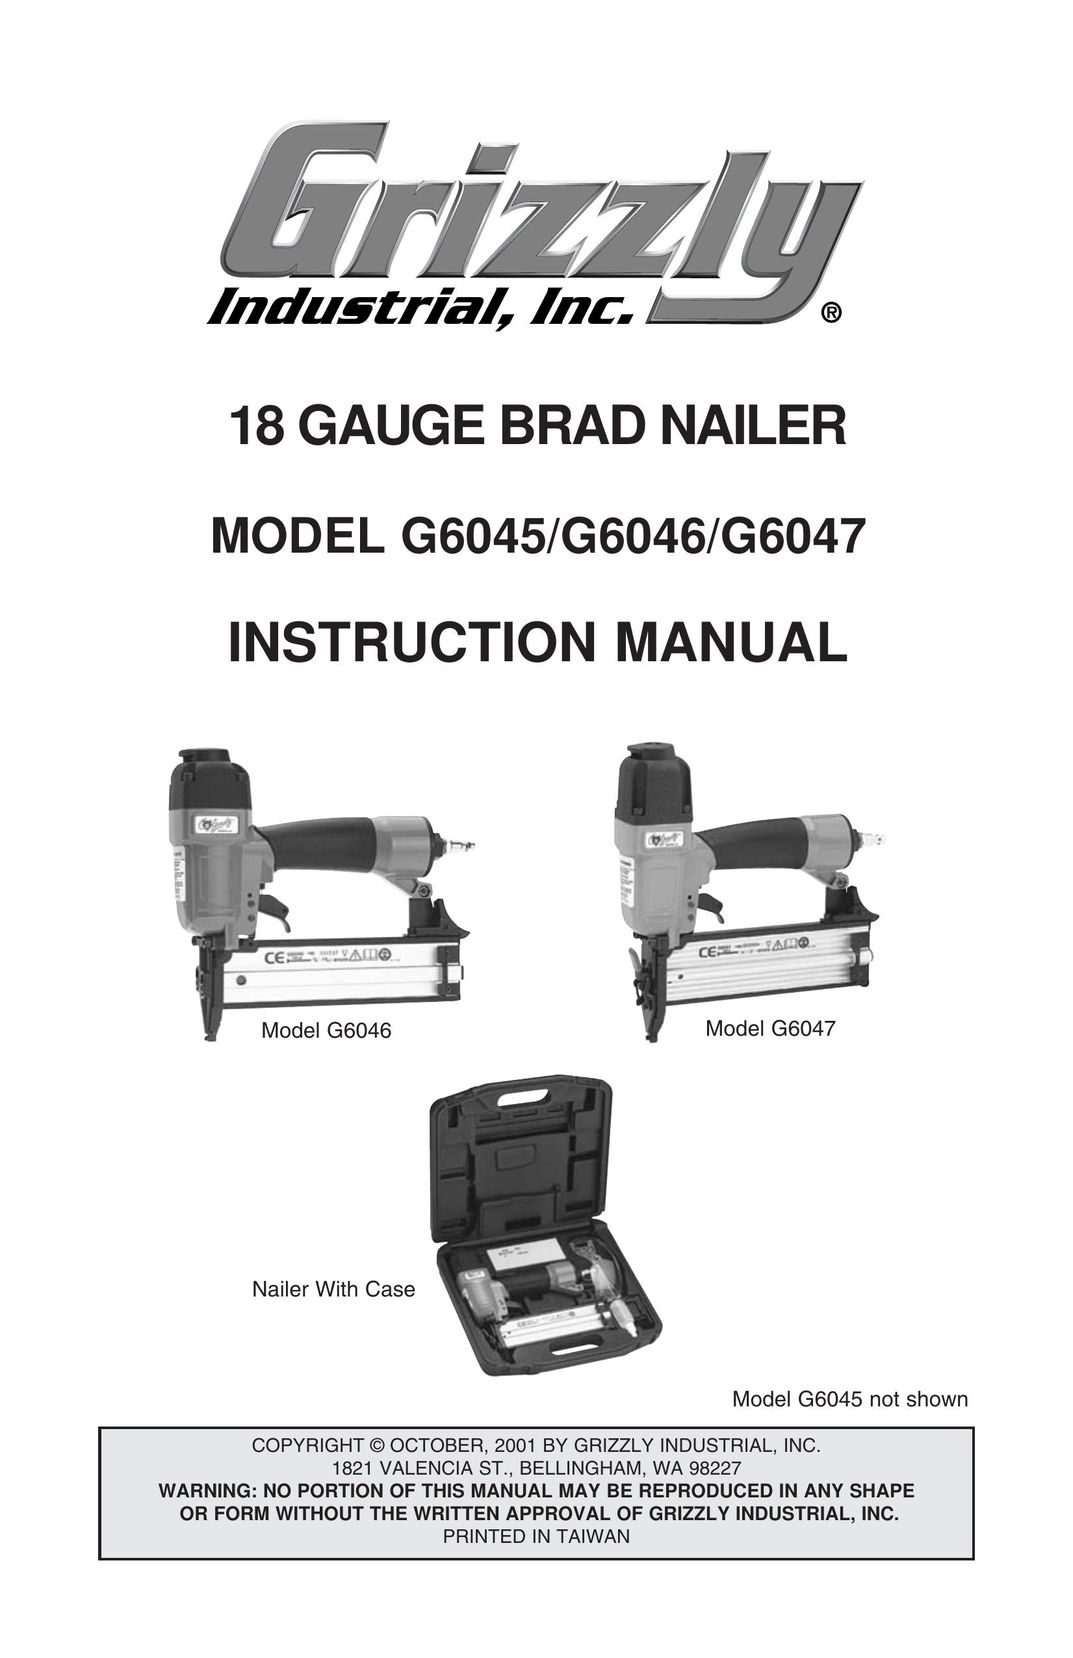 Grizzly G6046 Nail Gun User Manual